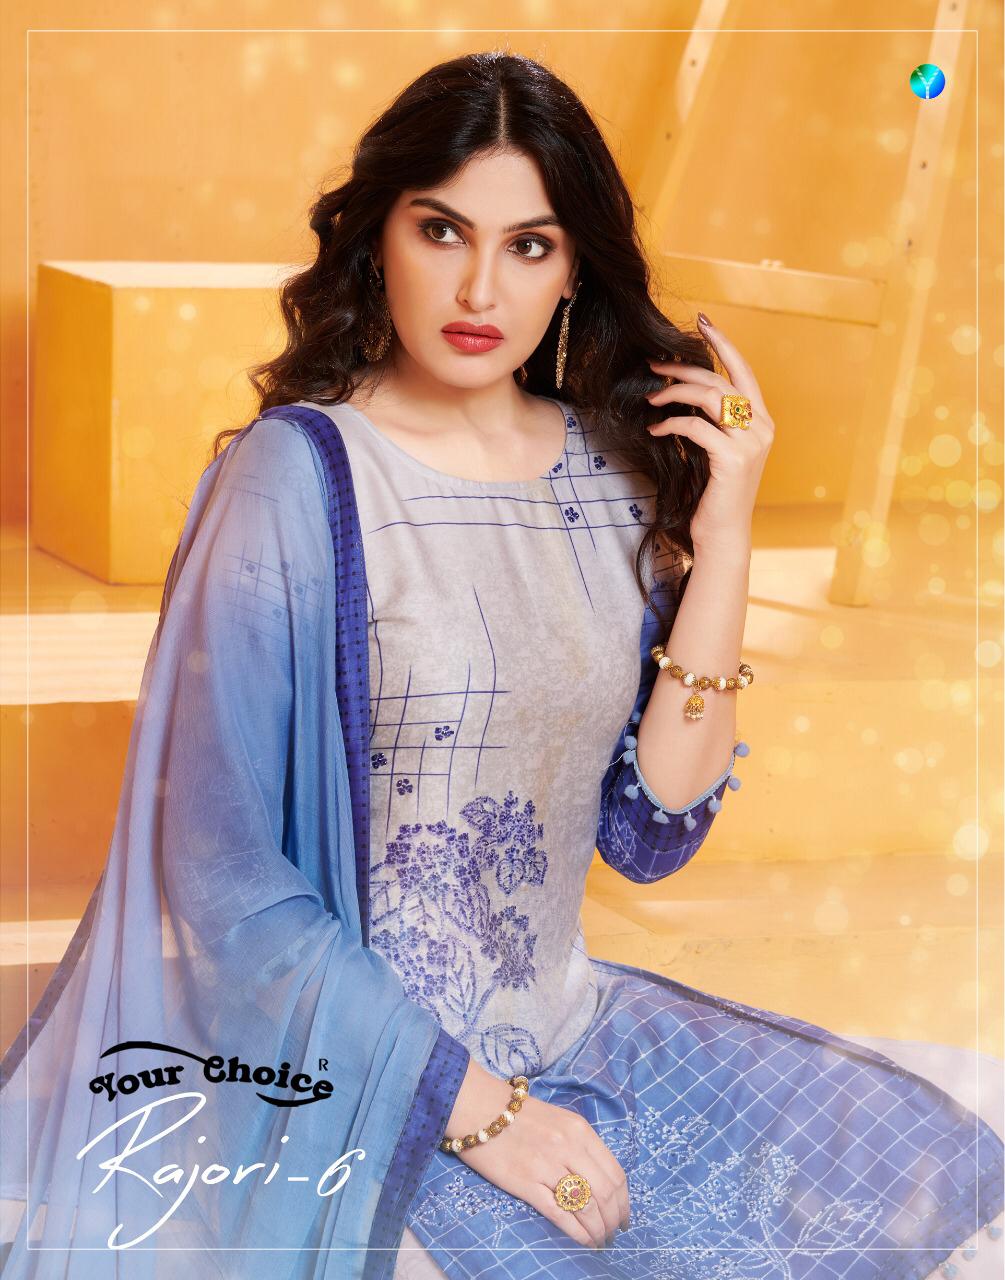 Your Choice Rajori Vol 6 Printed Pure Cotton Dress Material ...